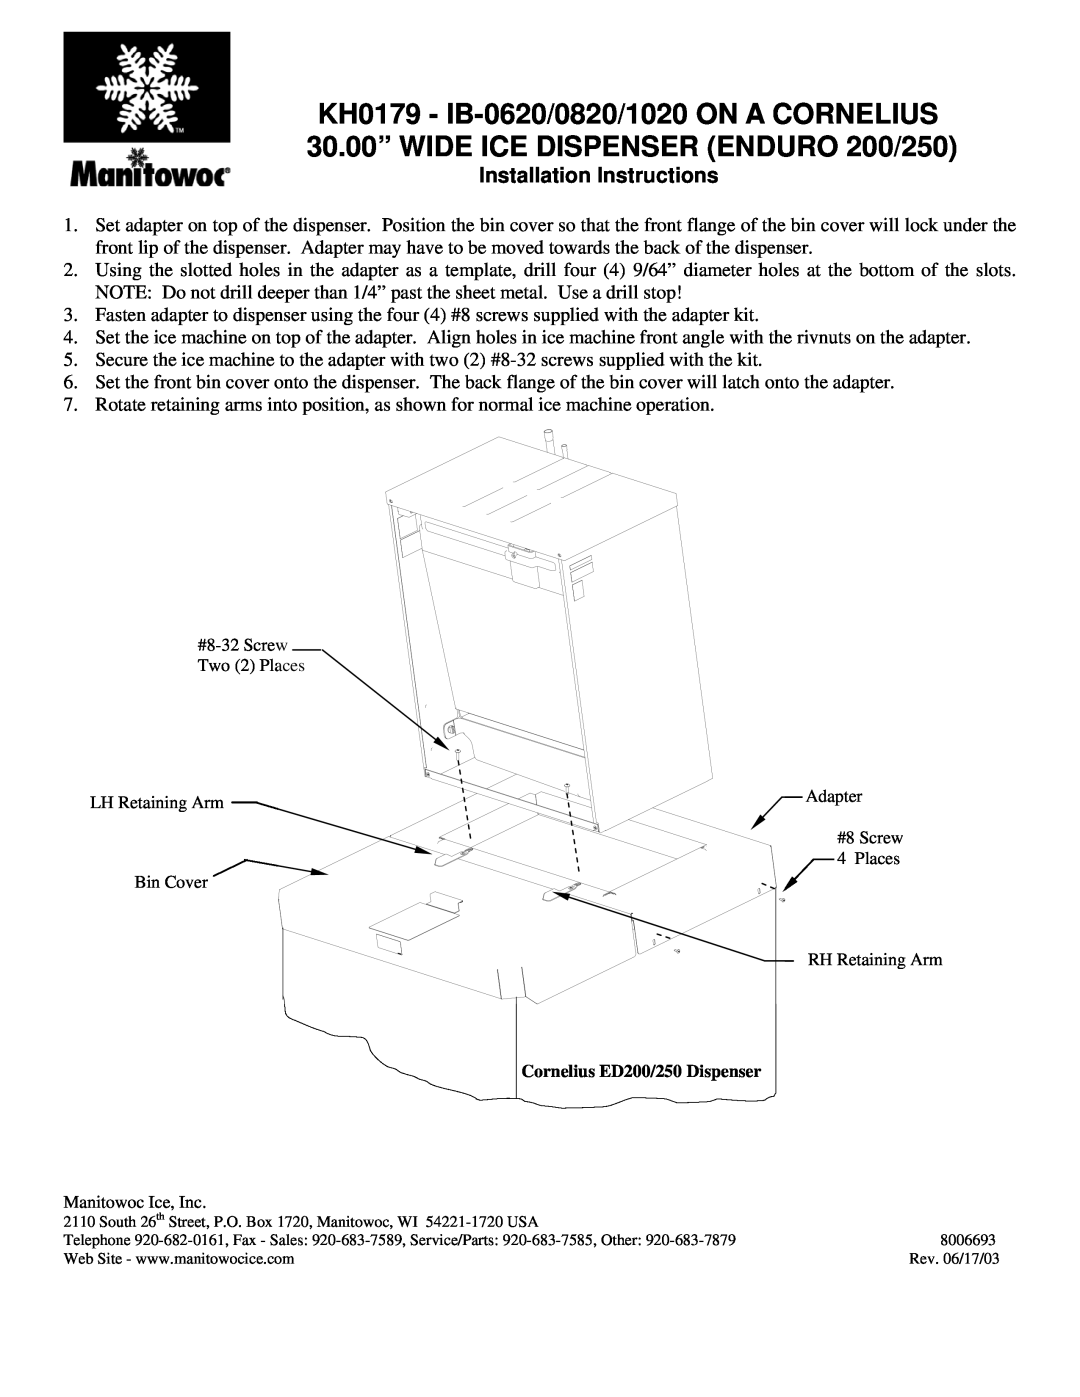 Manitowoc Ice KH0179 installation instructions Installation Instructions, Cornelius ED200/250 Dispenser 